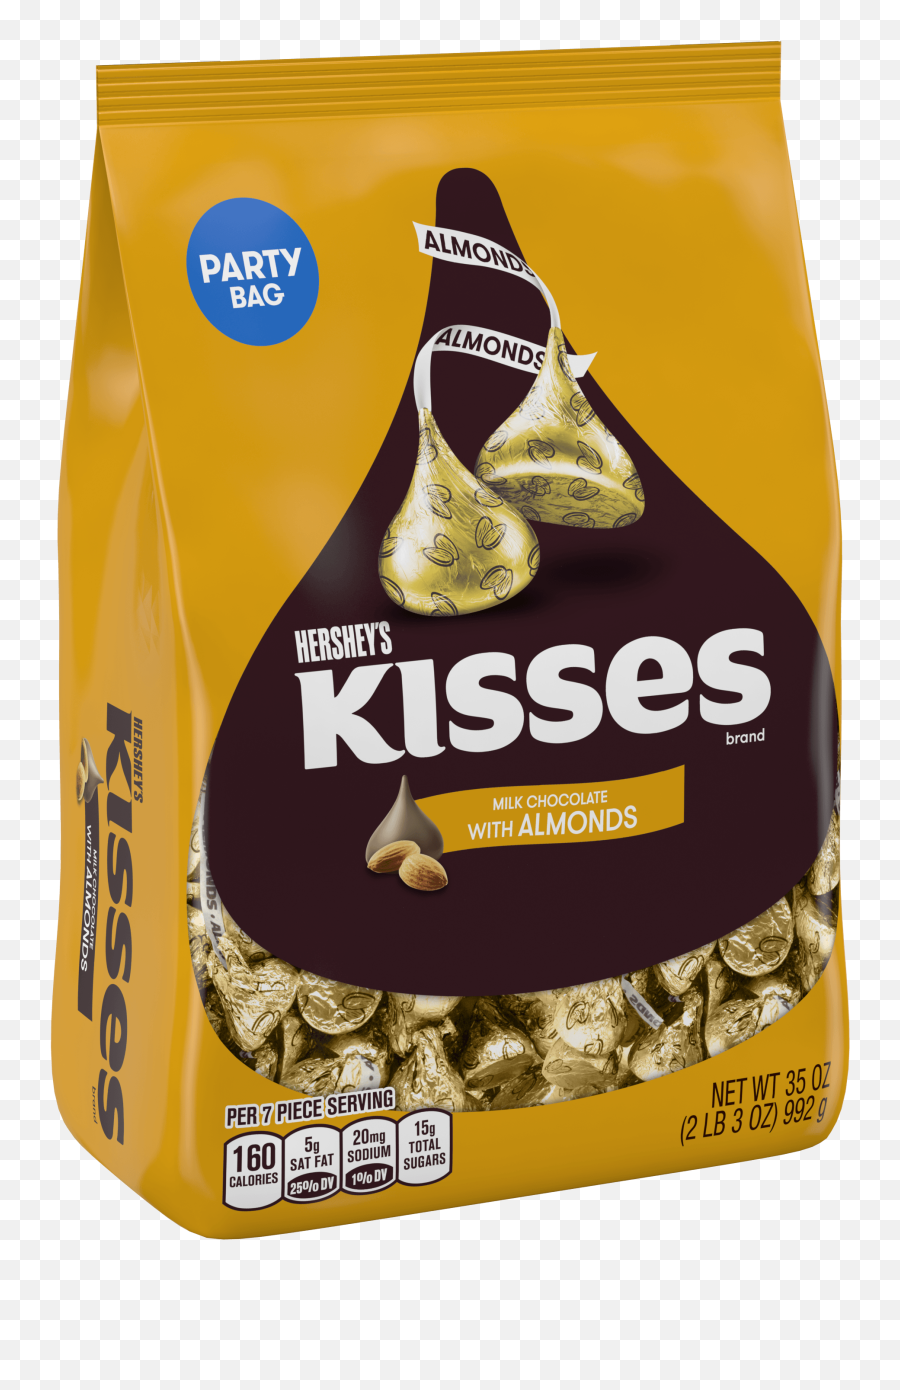 Hersheyu0027s Kisses Milk Chocolate Candy With Almonds 35 Oz - Walmartcom Kisses Chocolate Png,Hershey's Kisses Logo